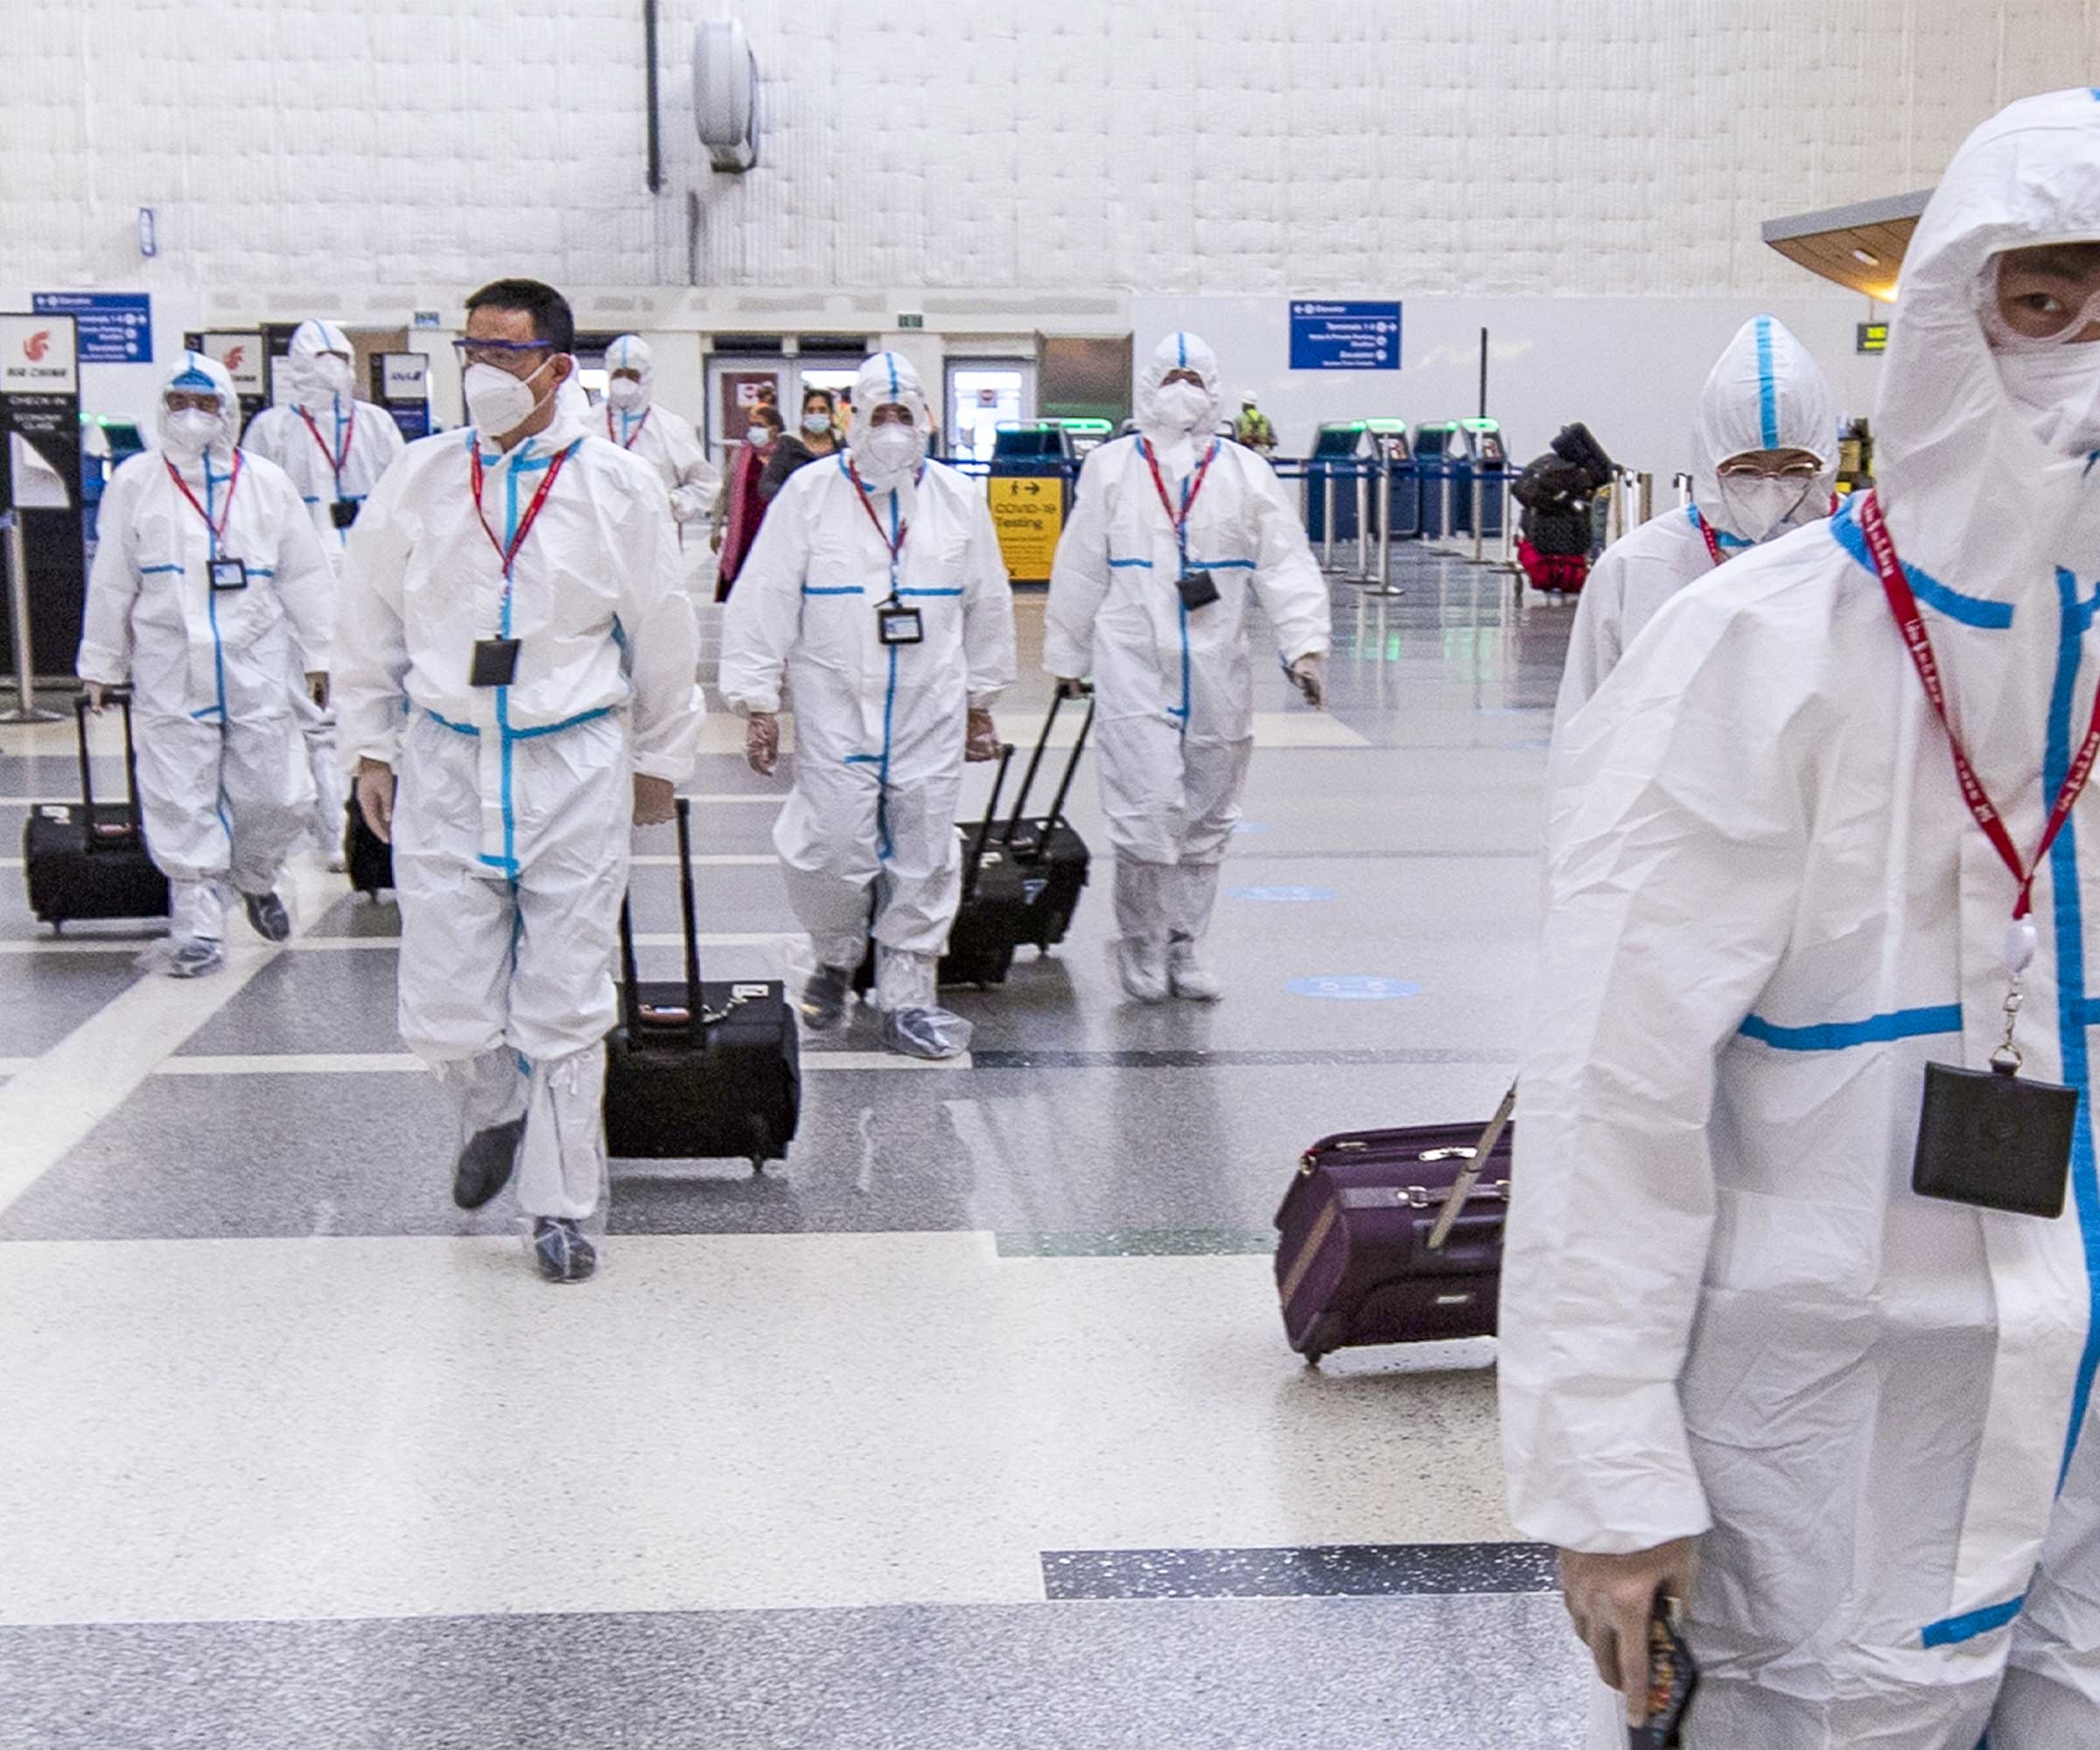 Airline crew members arrive at Los Angeles International Airport. © Etienne Lauren/EPA-EFE/Shutterstock